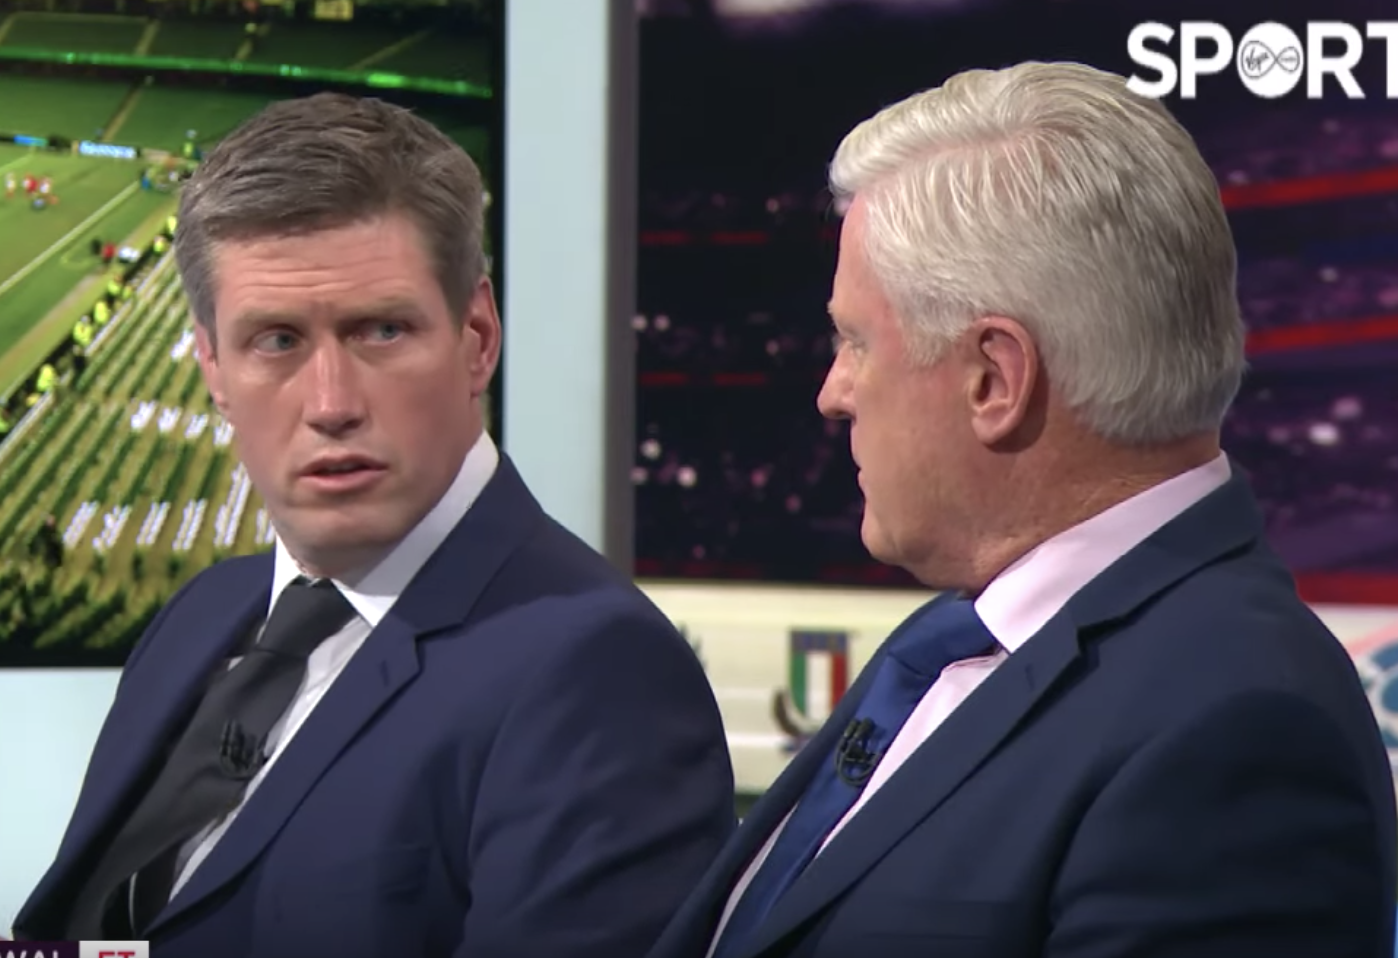 Ronan O'Gara schools pundit in heated debate over Ireland rugby | Rugby ...